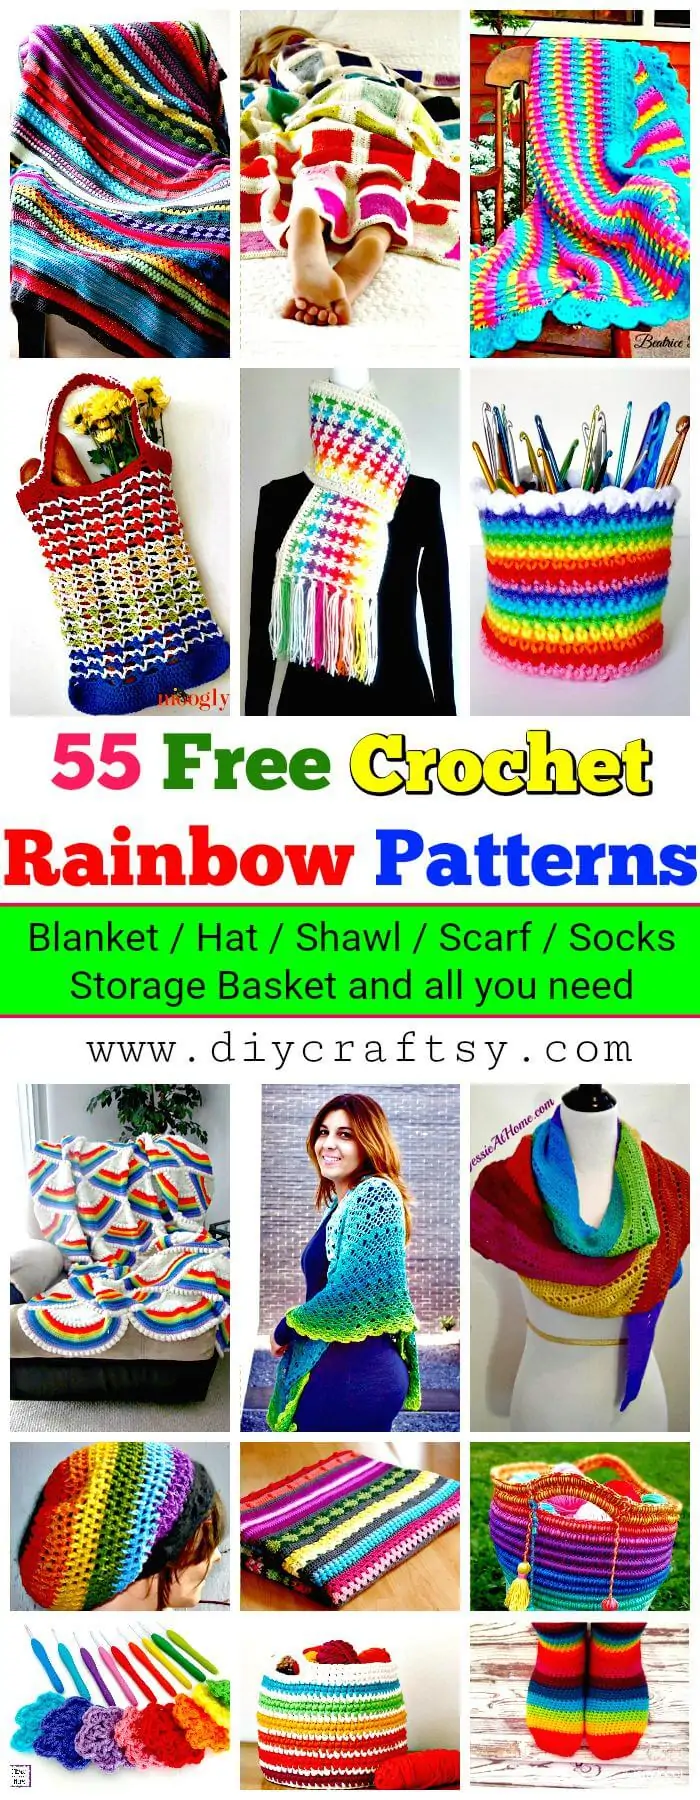 55-Free-Crochet-Rainbow-Patterns-14-Rainbow-Blanket